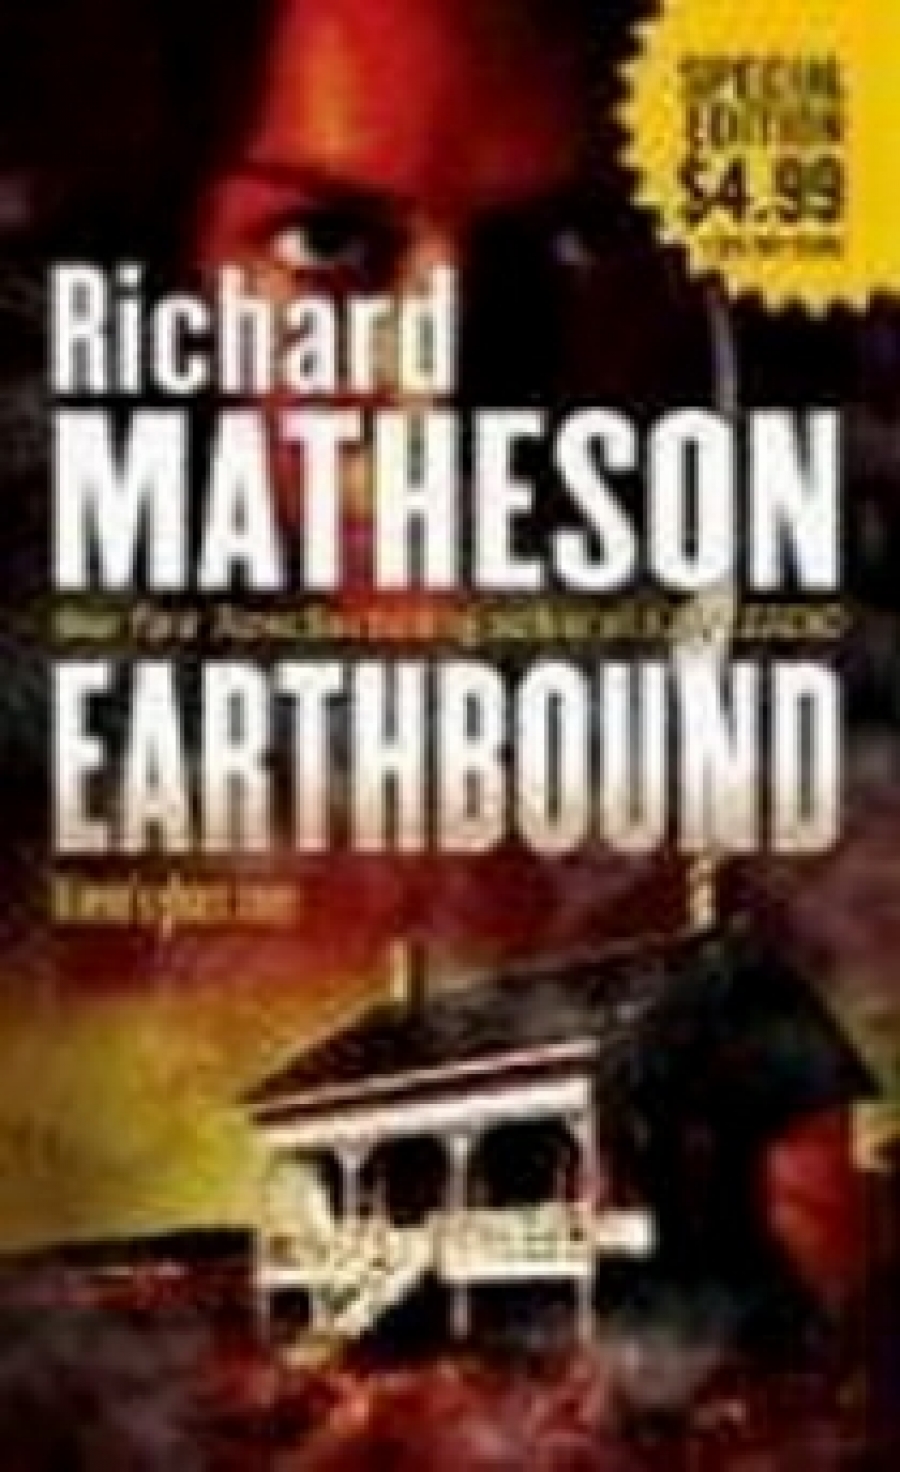 Richard M. Earthbound 